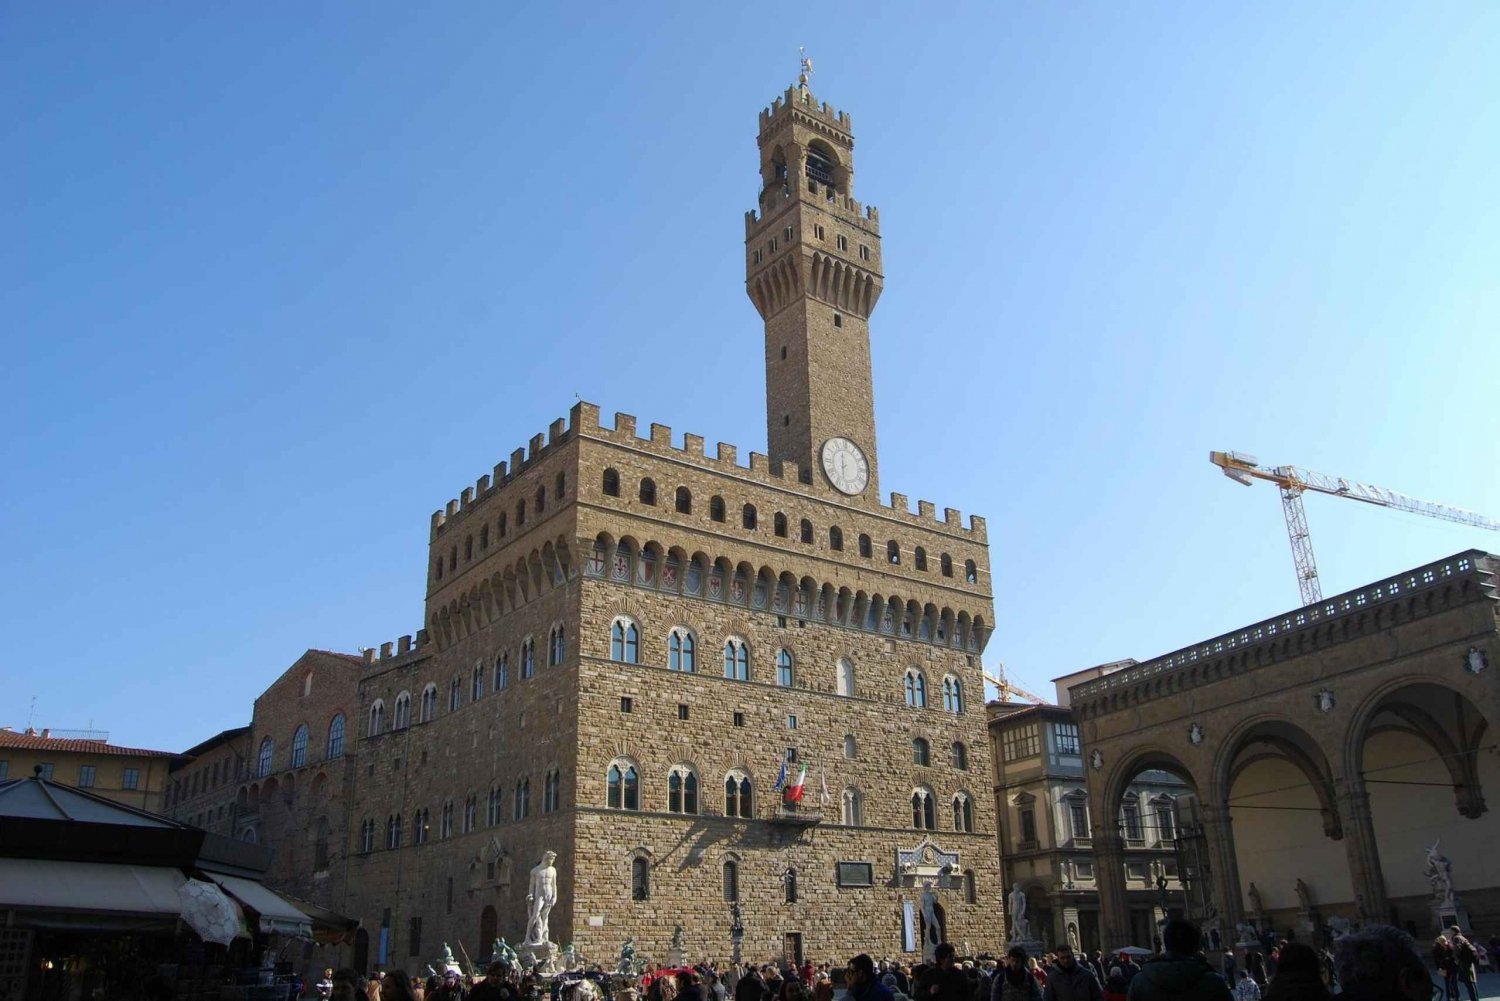 Florencia: tour guiado al Palazzo Vecchio